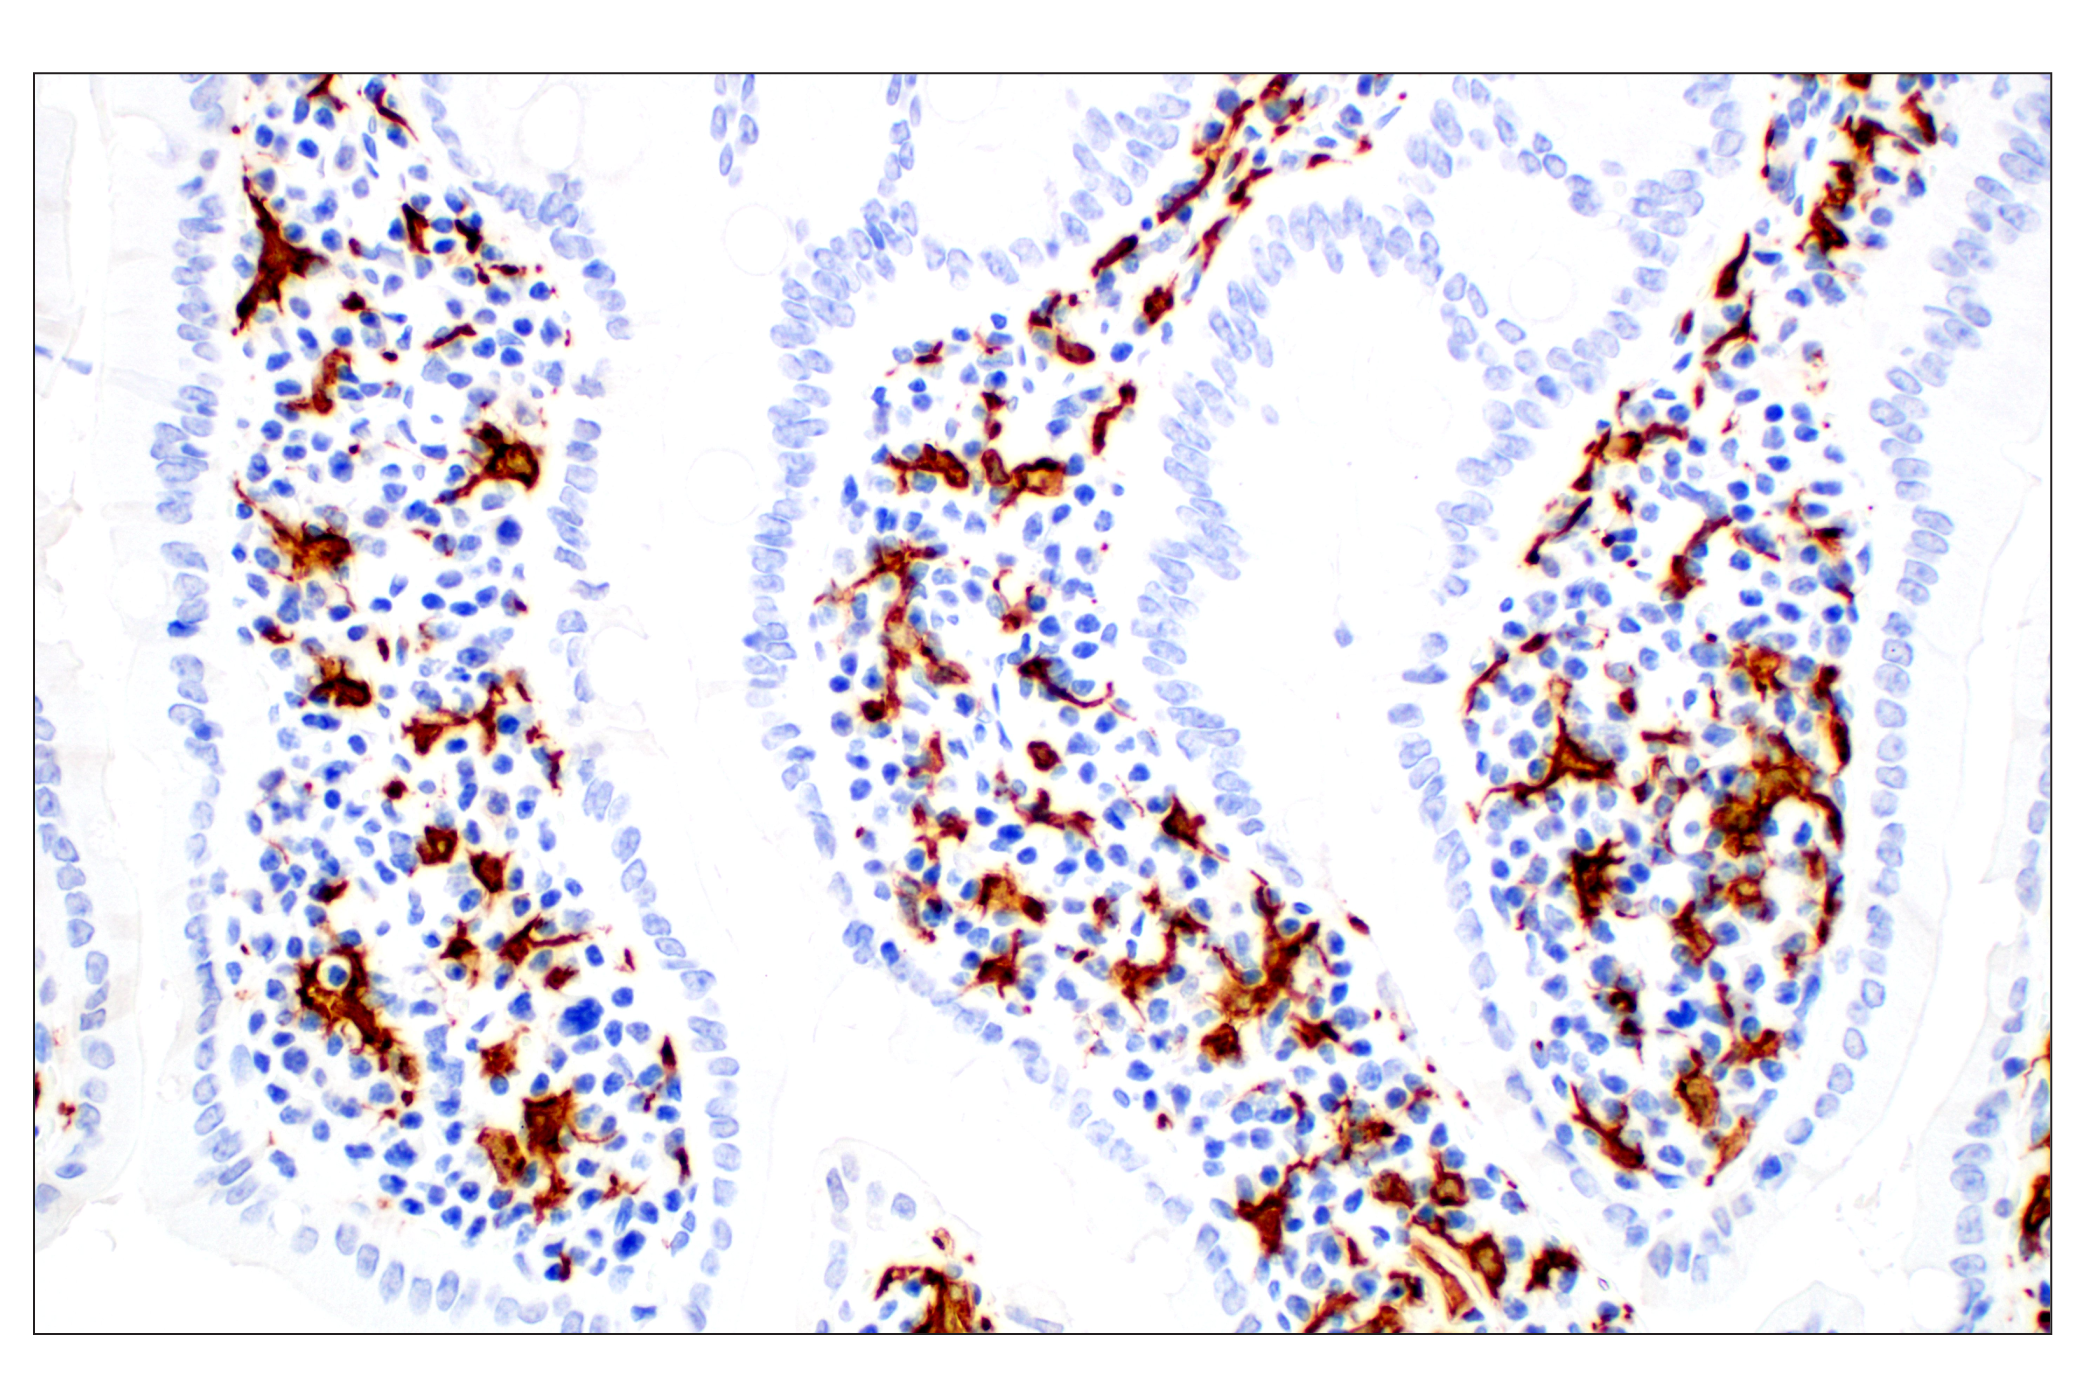  Image 60: Mouse Microglia Marker IF Antibody Sampler Kit